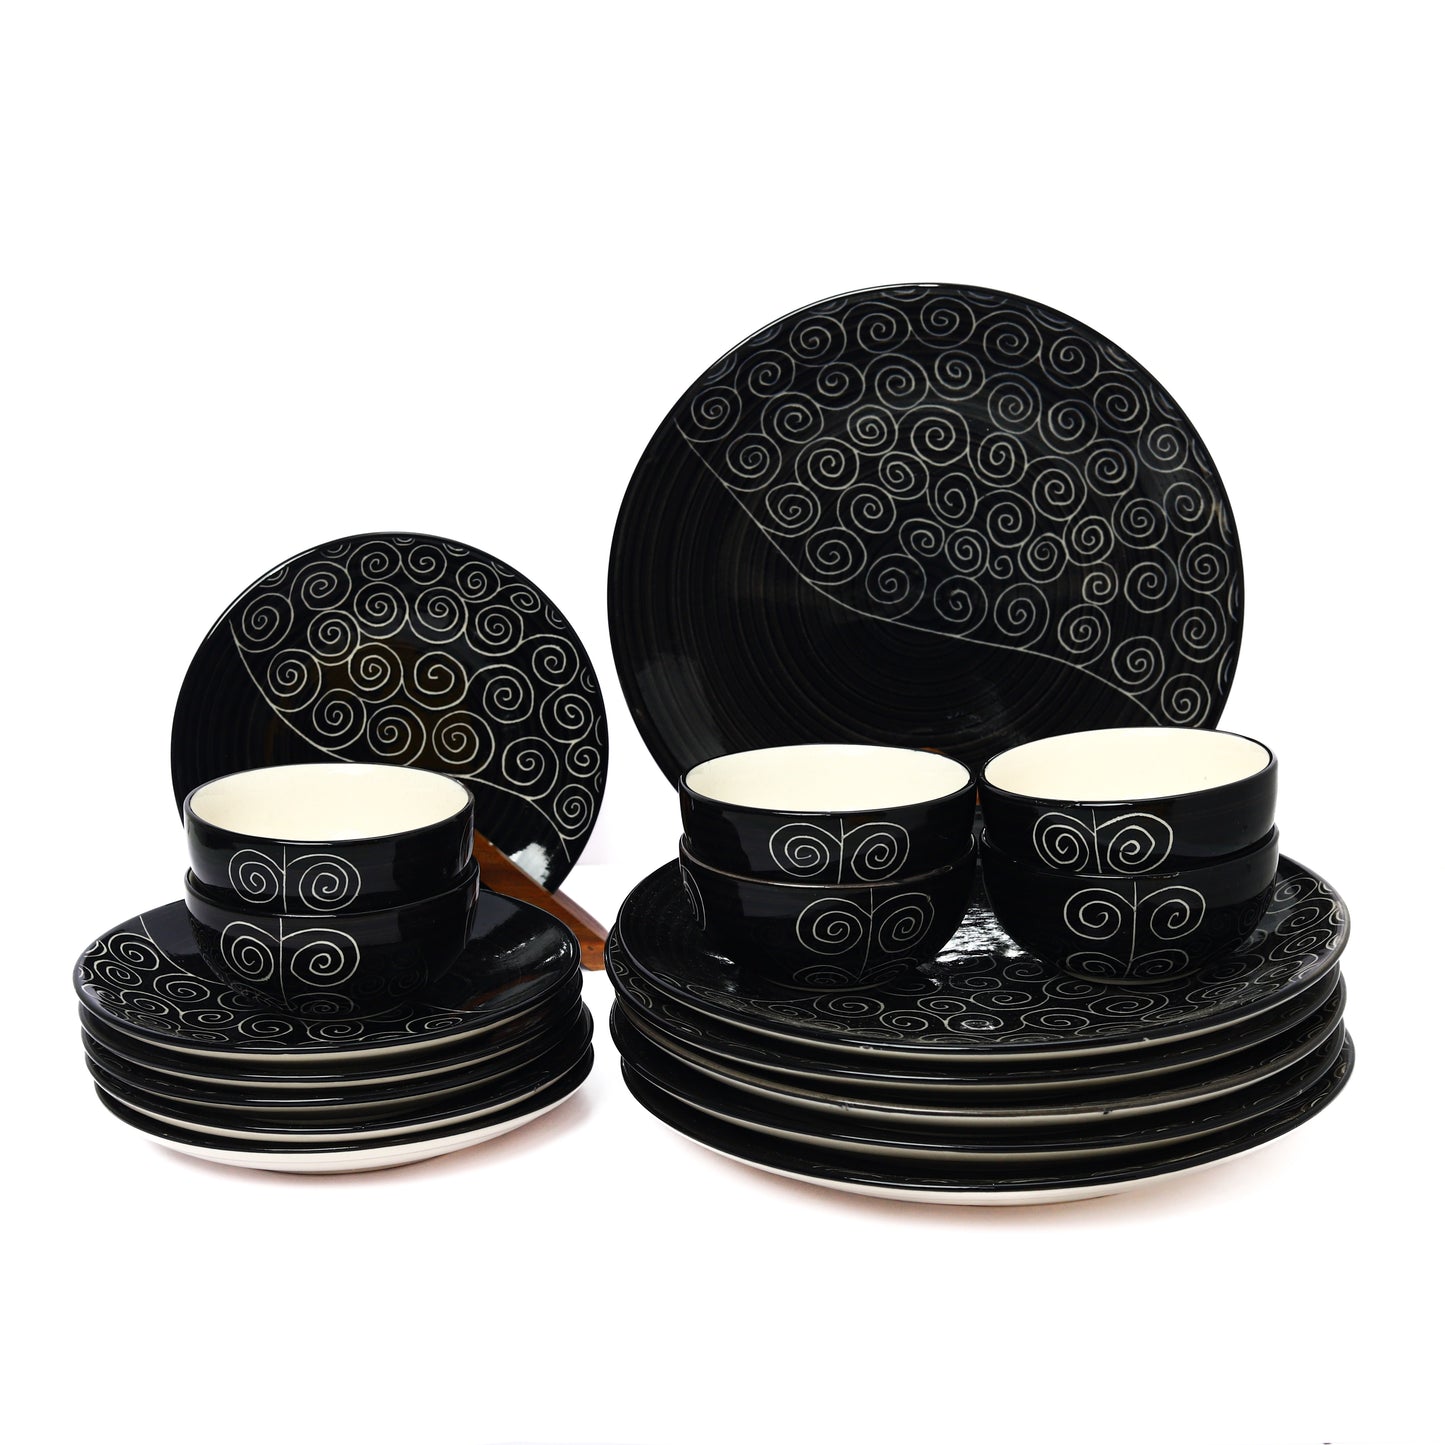 'Black Vine' Ceramic Dinner Set of 6 Dinner Plate, 6 Quarter Plates & 6 Bowl Sets